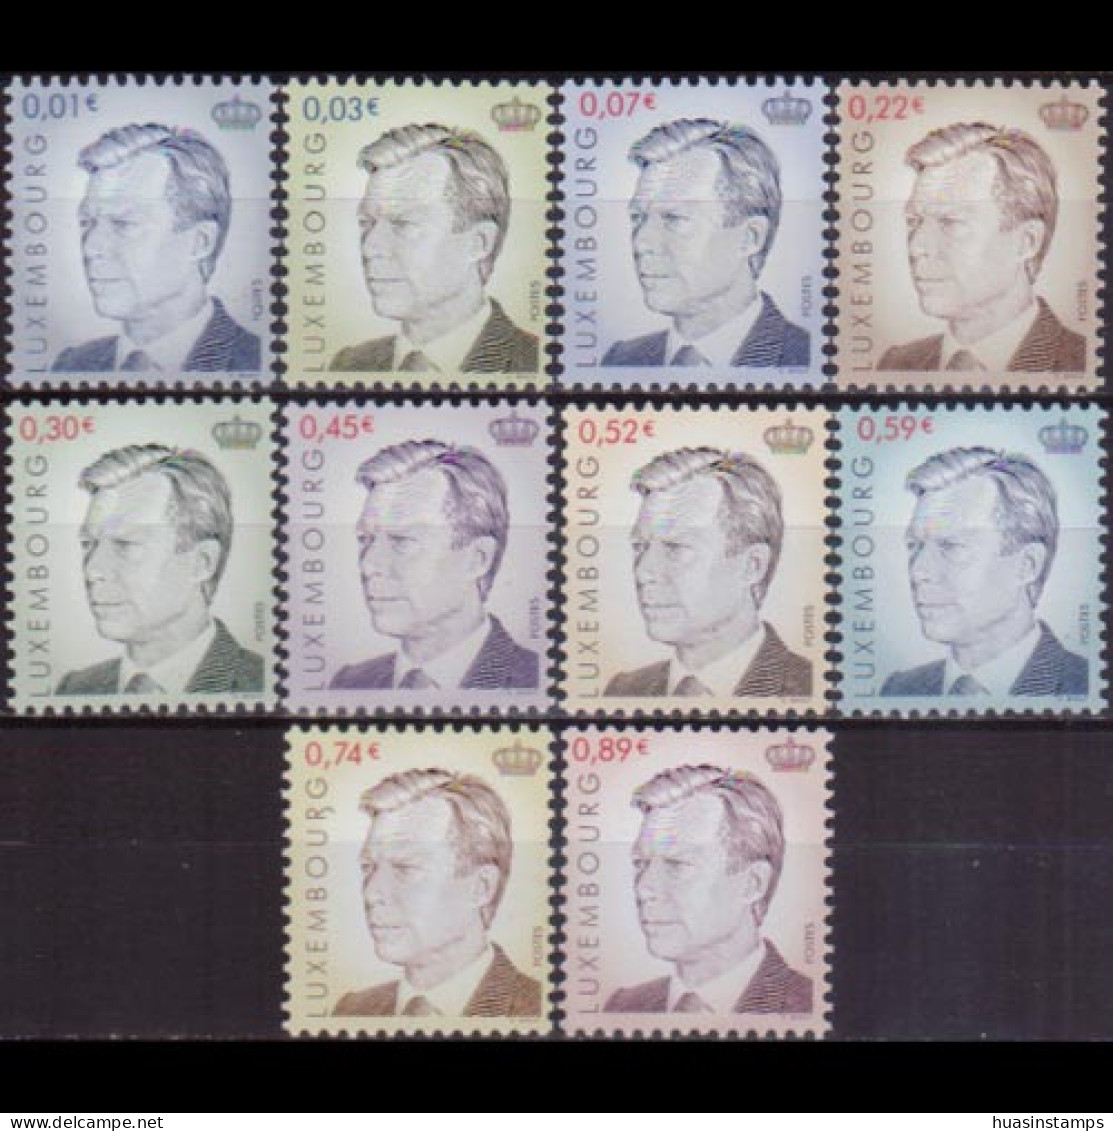 LUXEMBOURG 2001 - #1072-81 Grand Duke Henri Set Of 10 MNH - Unused Stamps